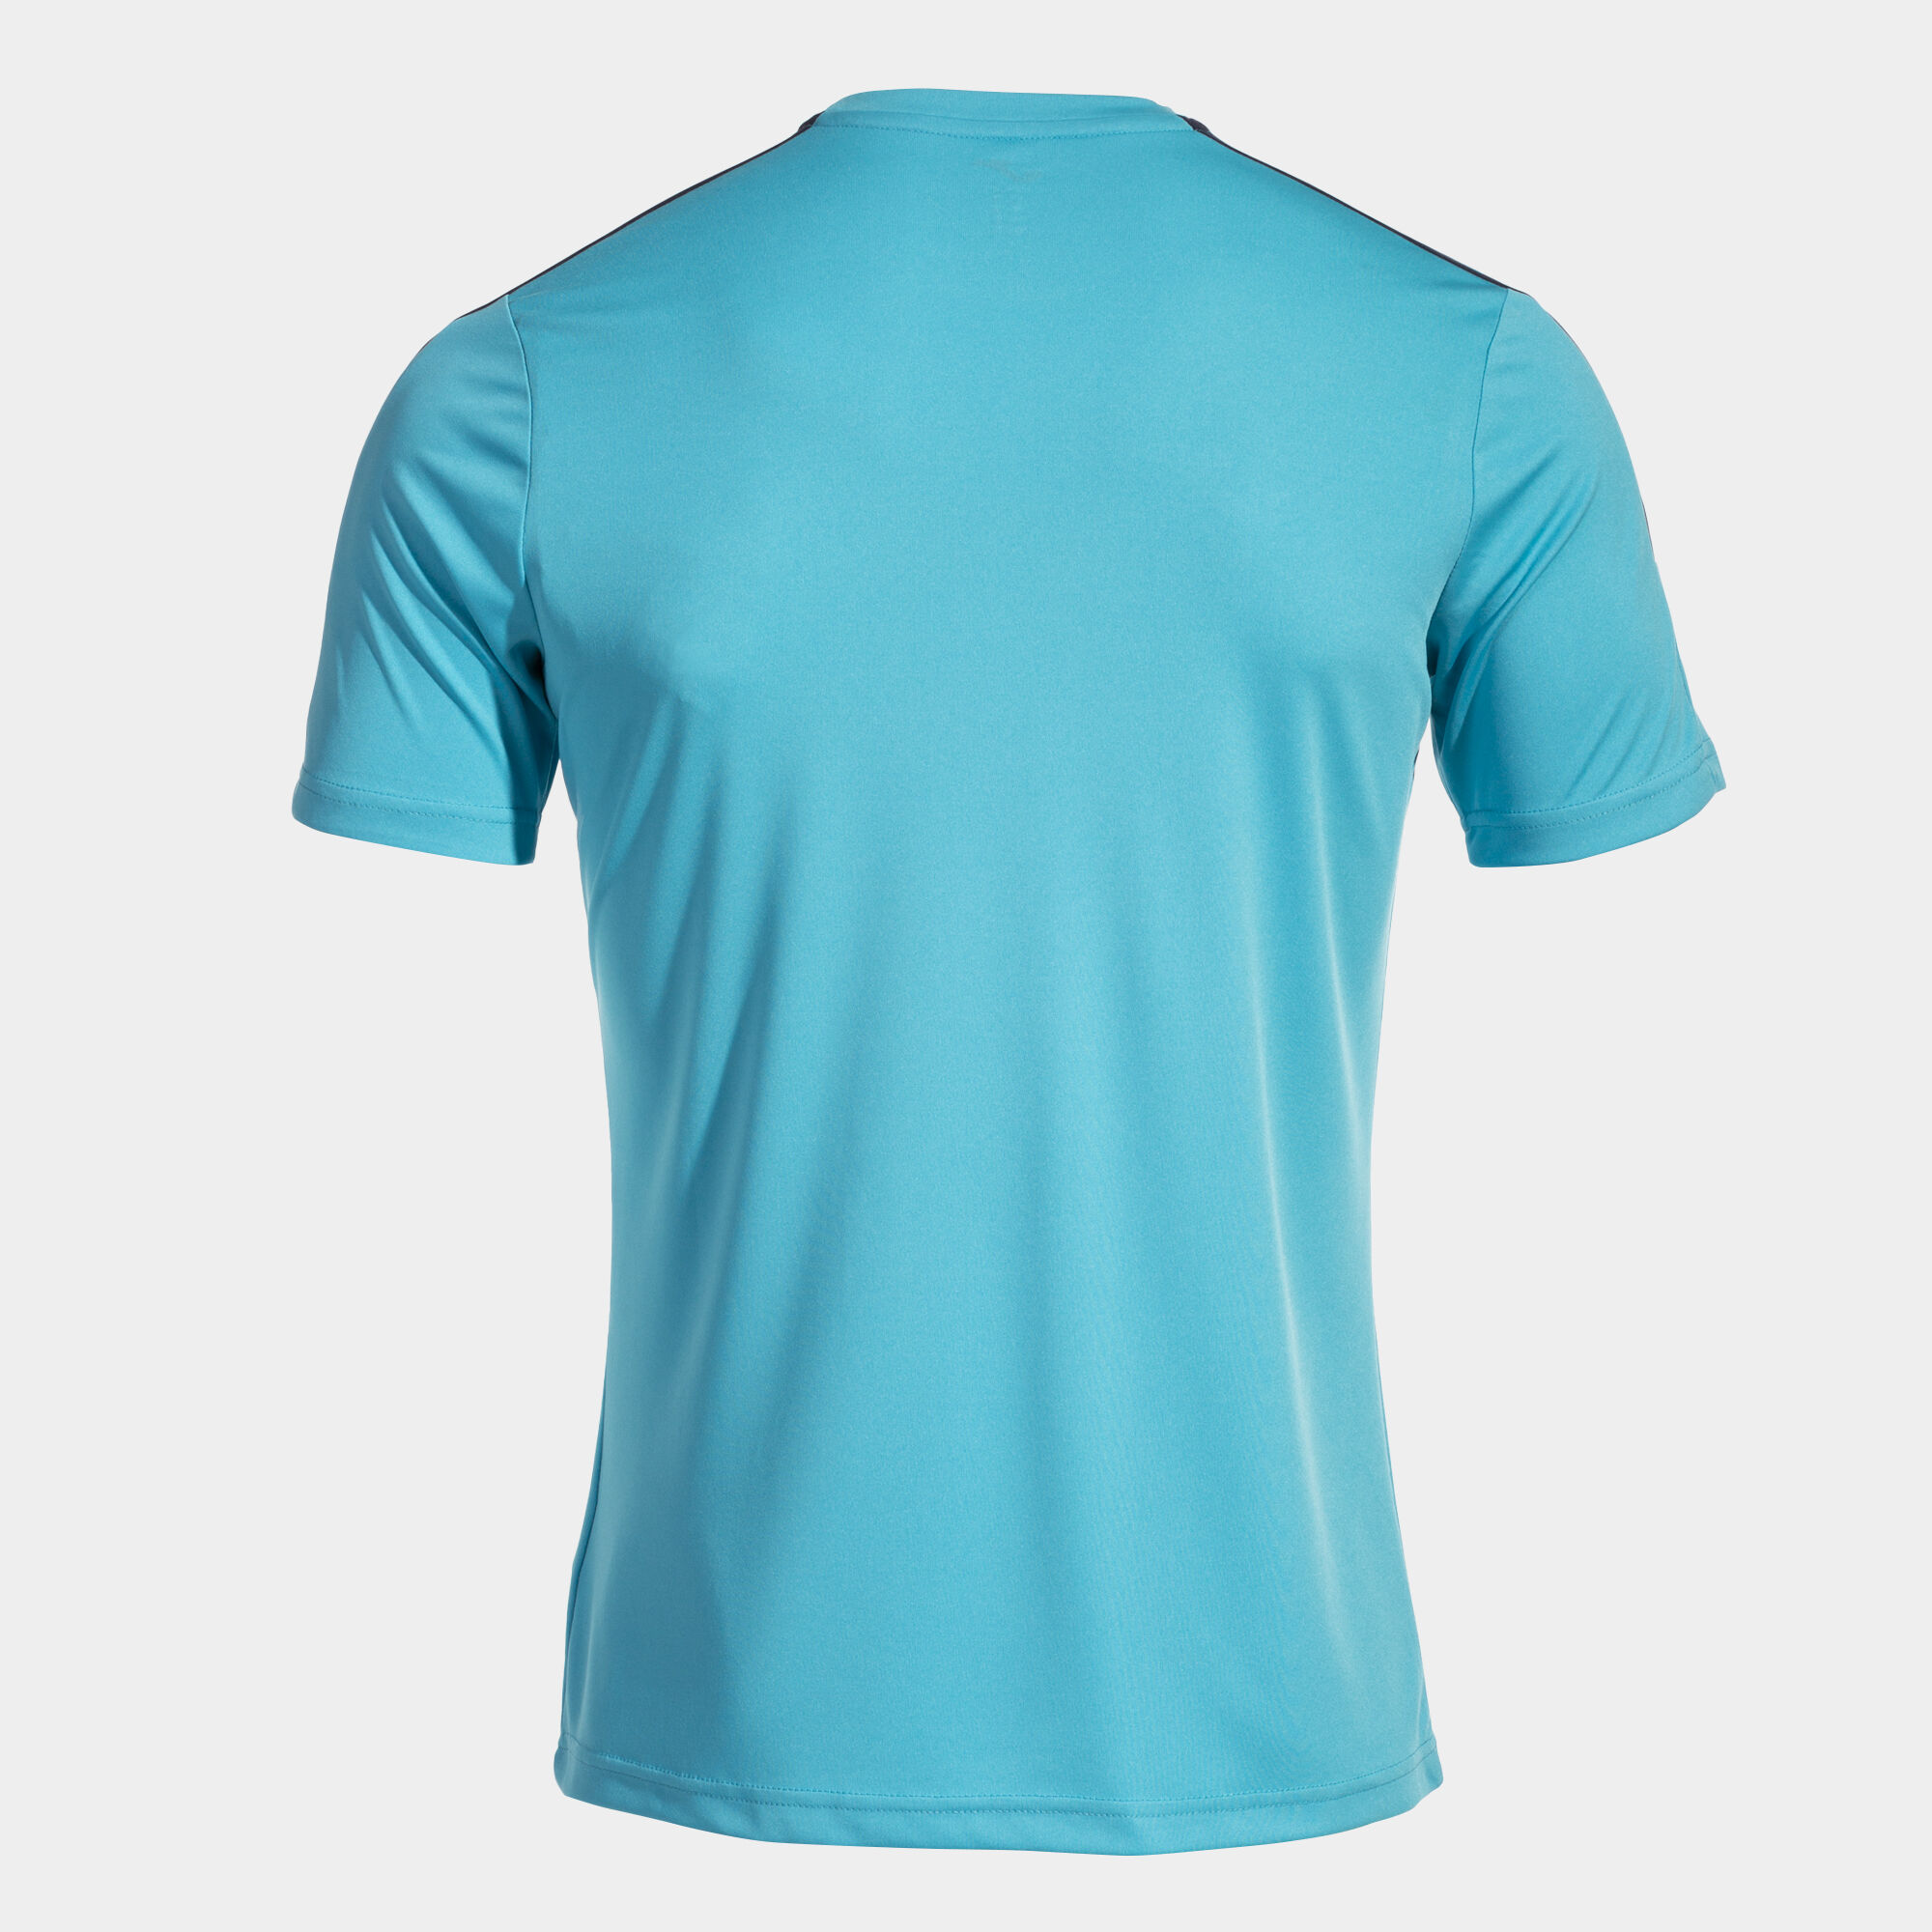 Camiseta manga corta hombre Olimpiada turquesa flúor marino